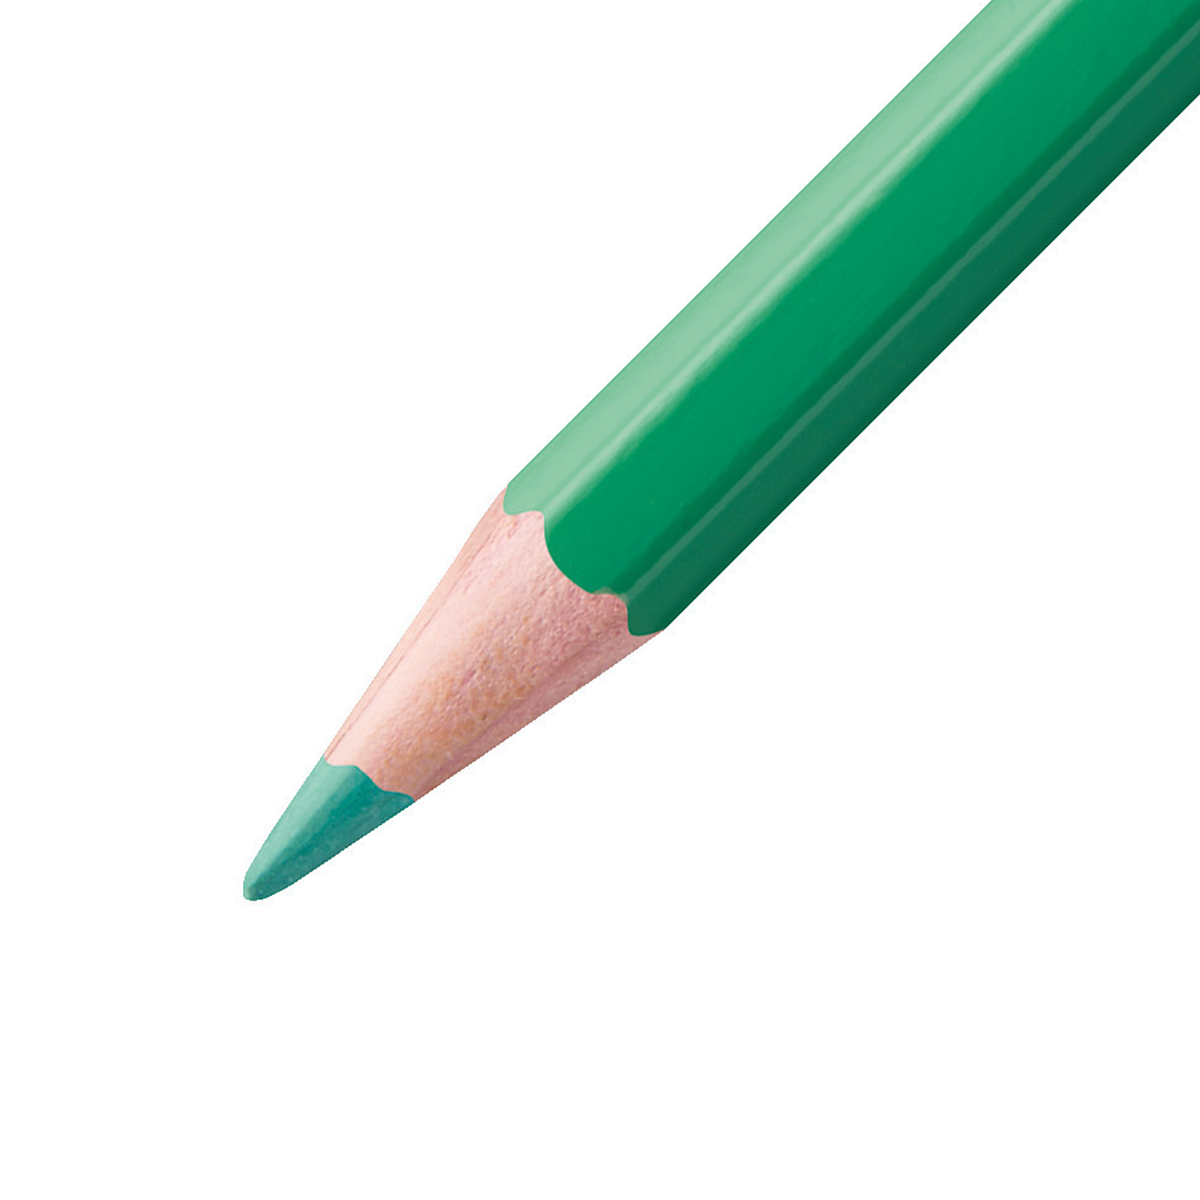 Aquacolor Watercolour Pencils 36 pcs in the group Kids / Kids' Pens / Coloring Pencils for Kids at Pen Store (127800)